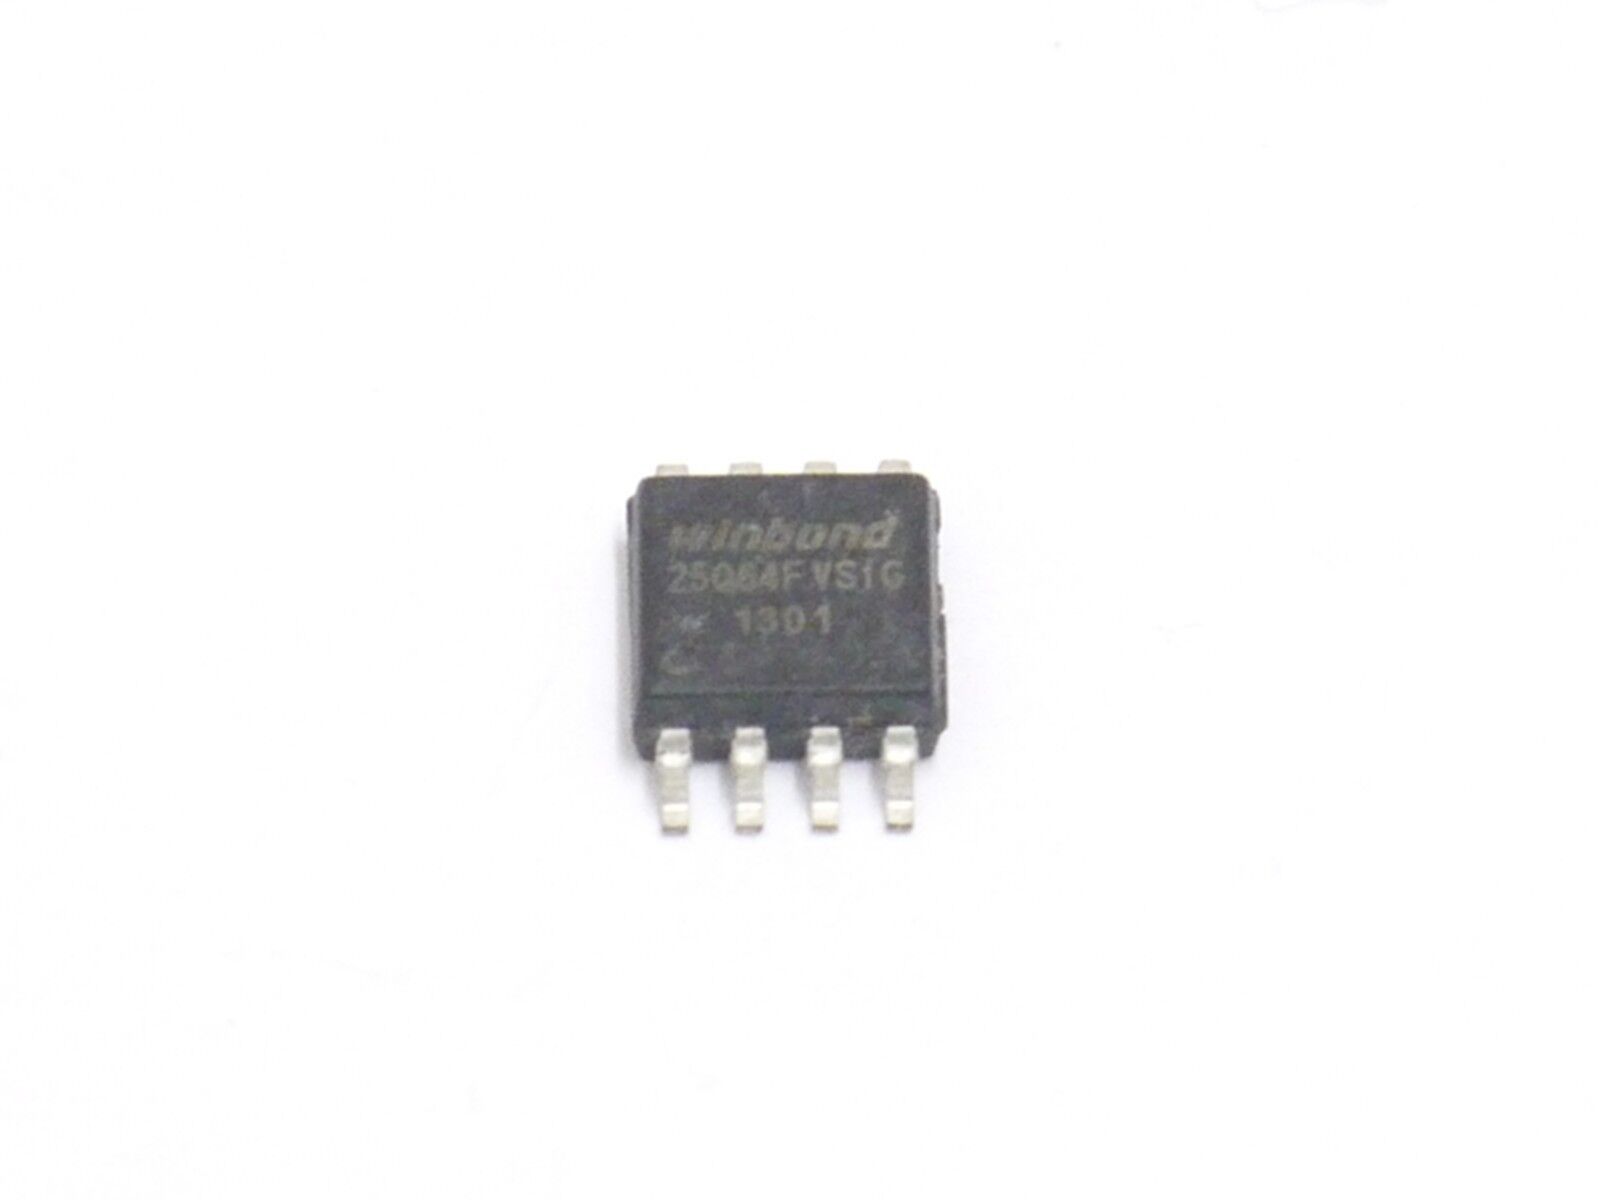 5 PCS WINBOND W 25Q64FVSIG SSOP 8pin Power IC Chip Chipset (Never Programed)